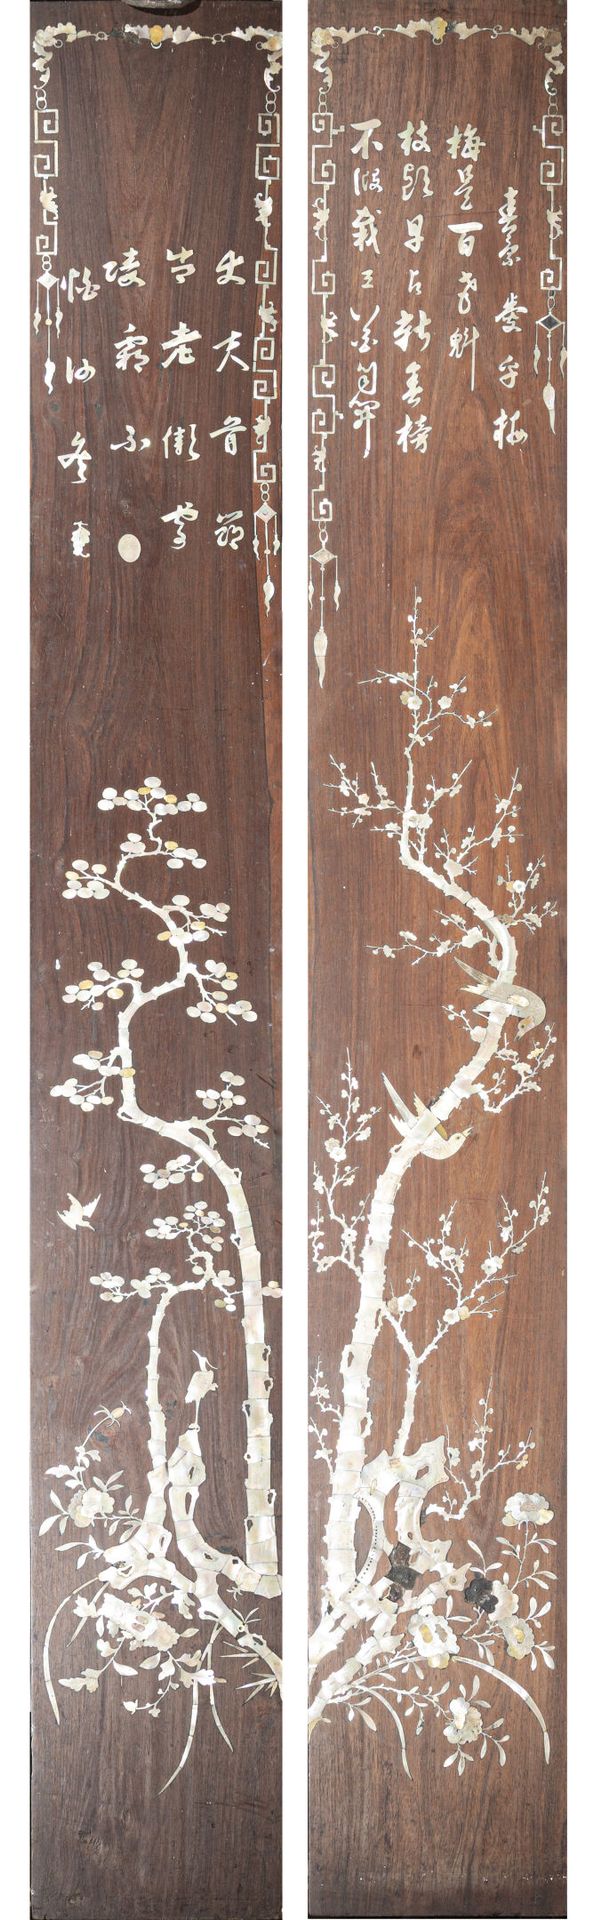 Null 一对镶嵌珍珠母的木板，印度支那/越南，20 世纪早期 
长方形，竖向，镶嵌有书法诗歌，上部为蝙蝠和雷文的中楣，下部为植物、鸟类和岩石，其中一块围绕着一&hellip;